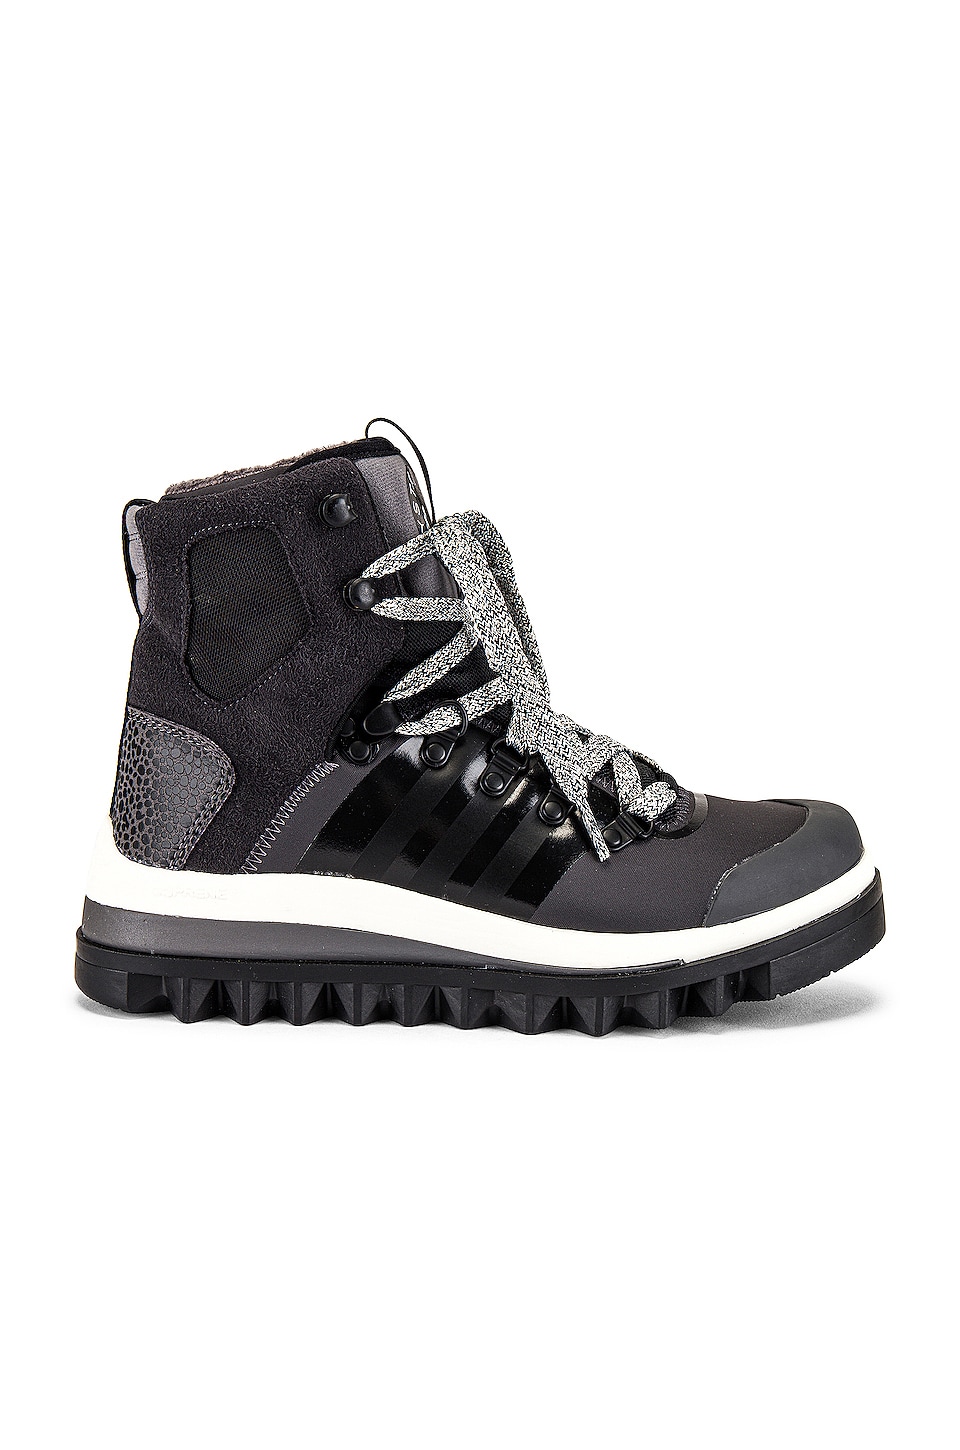 adidas by Stella McCartney ASMC Eulampis Boot in Black & Granite | REVOLVE